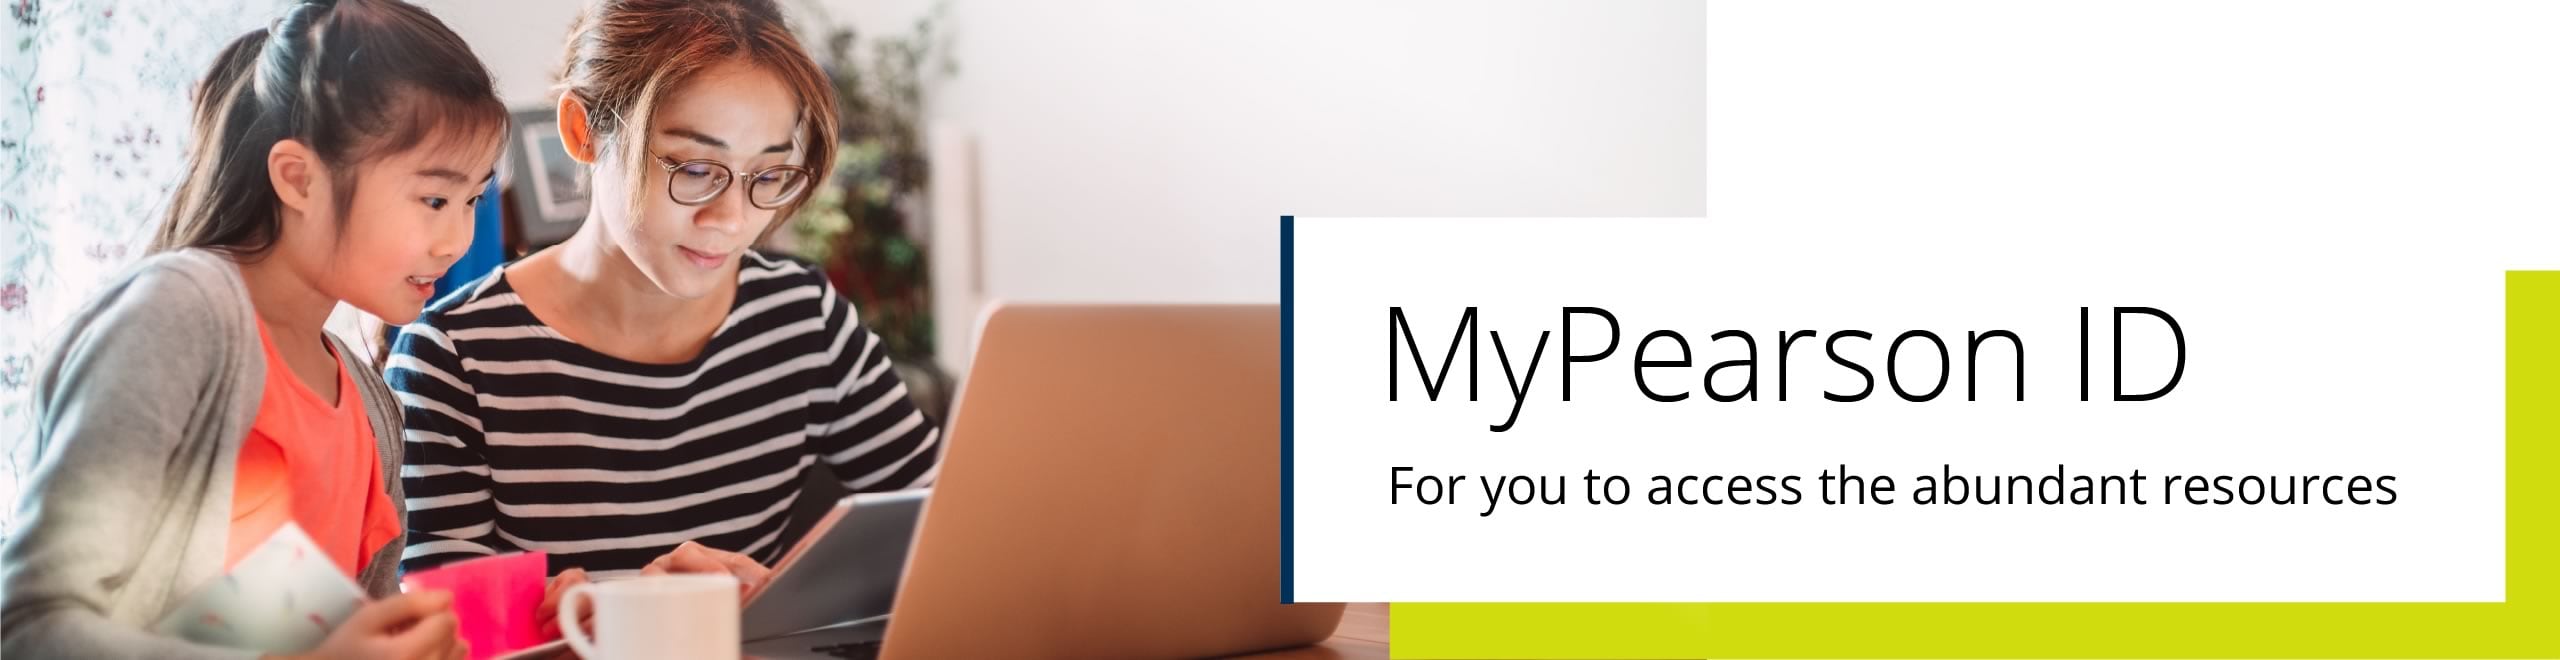 MyPearson ID: 讓您尊享培生的豐富資源